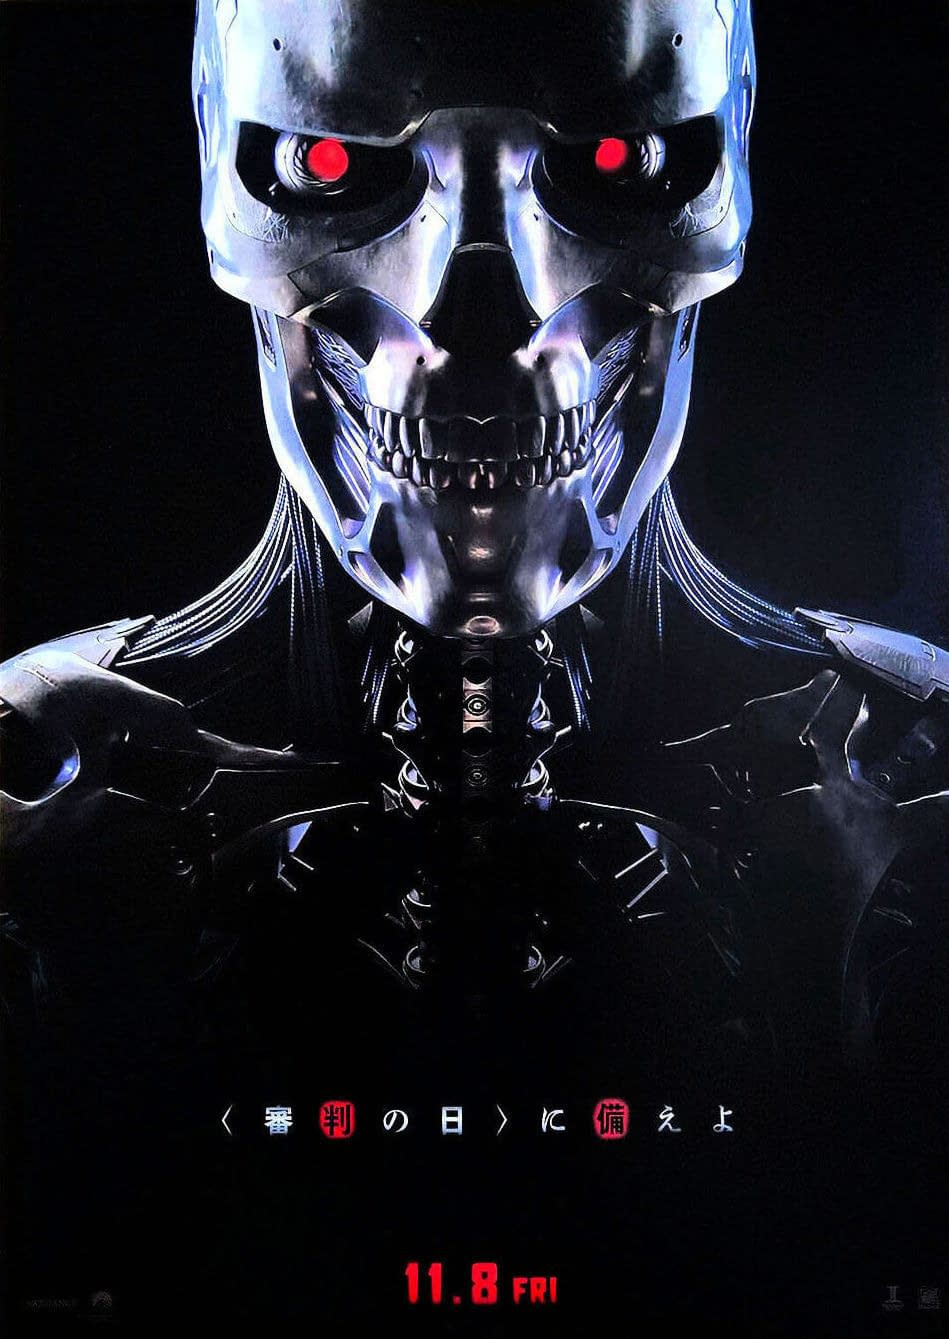 New International Poster for "Terminator: Dark Fate"